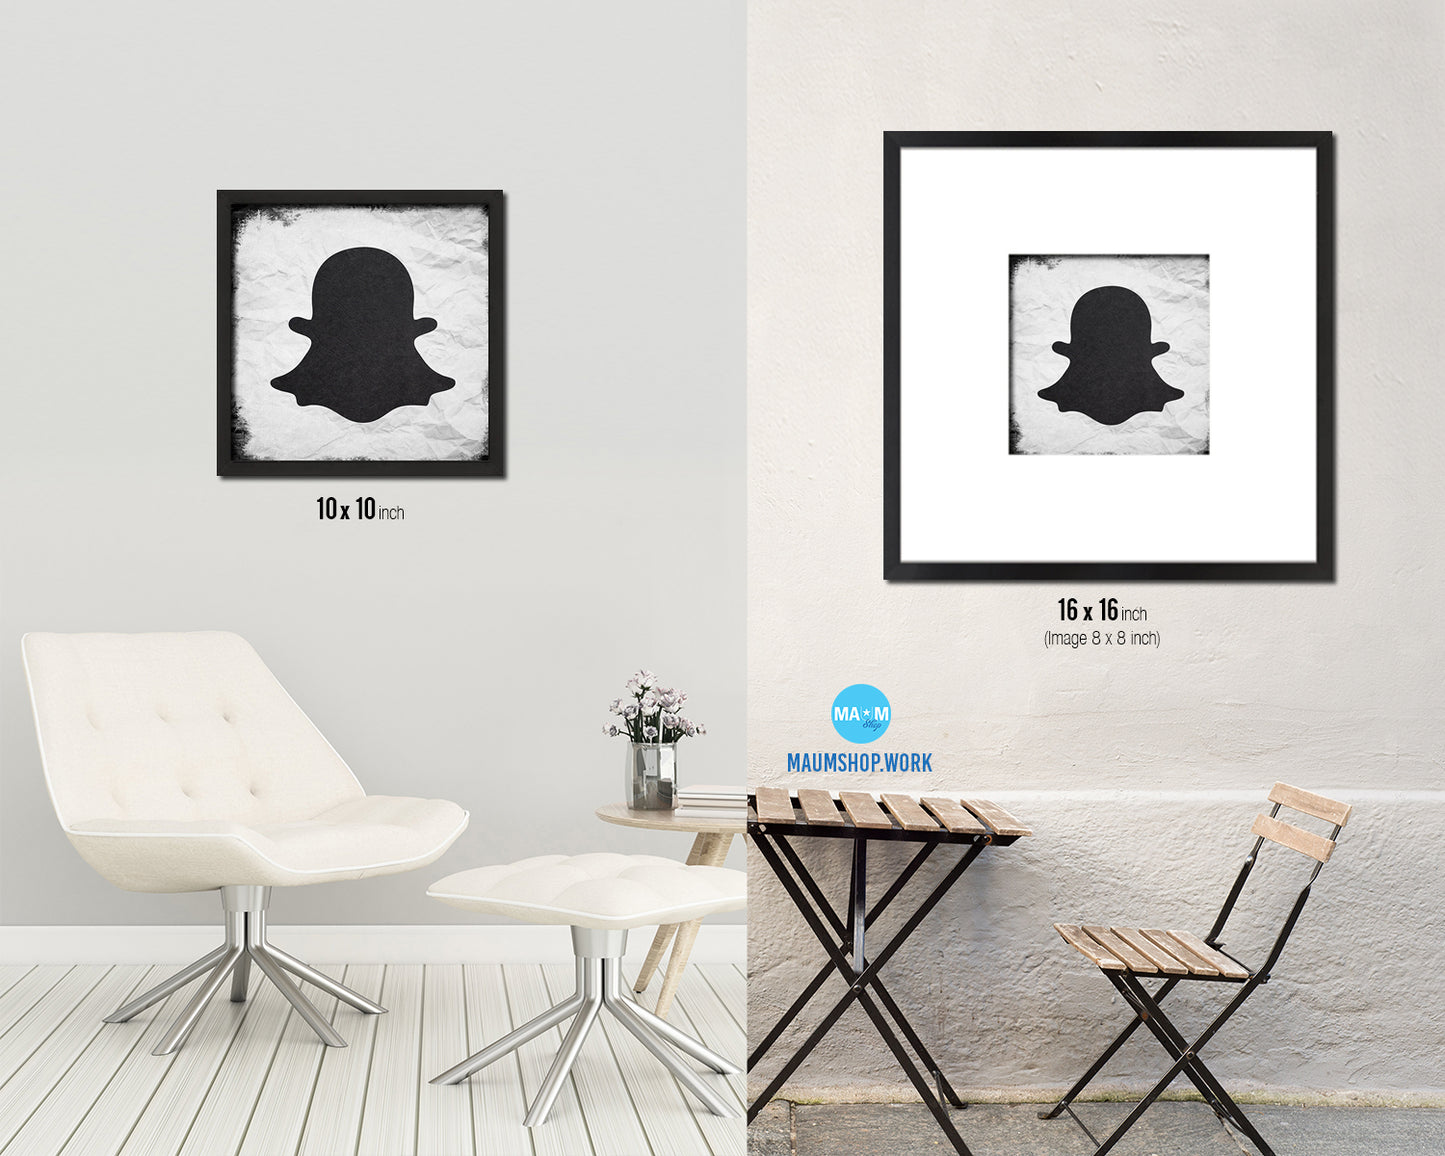 Snapchat Social Media Symbol Icons logo Wood Framed Print Home Decor Wall Art Gifts